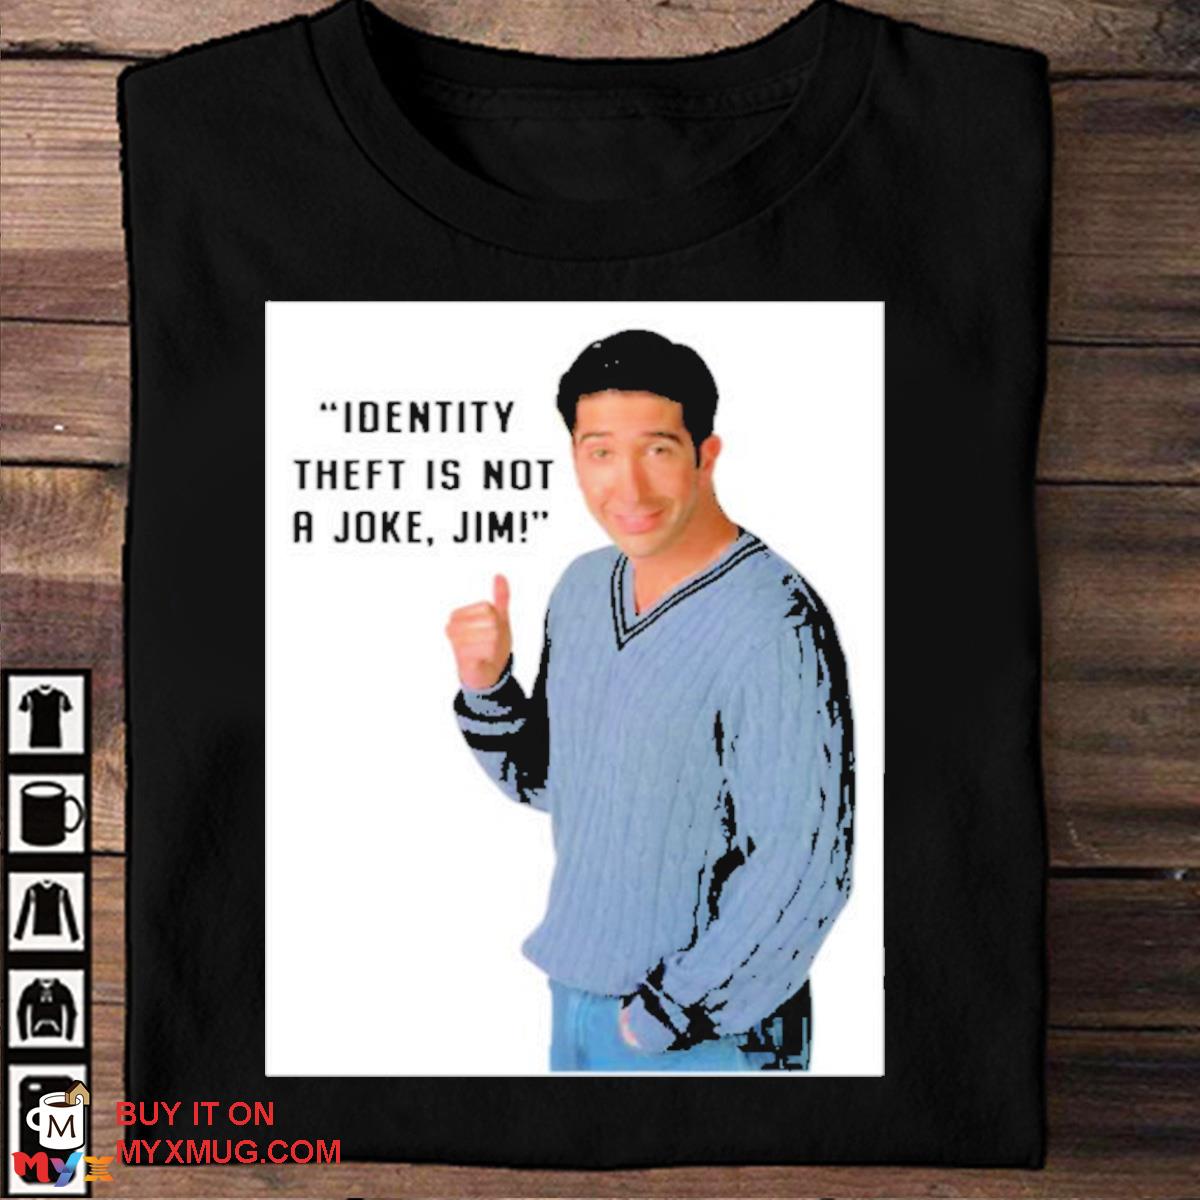 Identity theft is not a joke jim identity theft is not a joke jim shirt